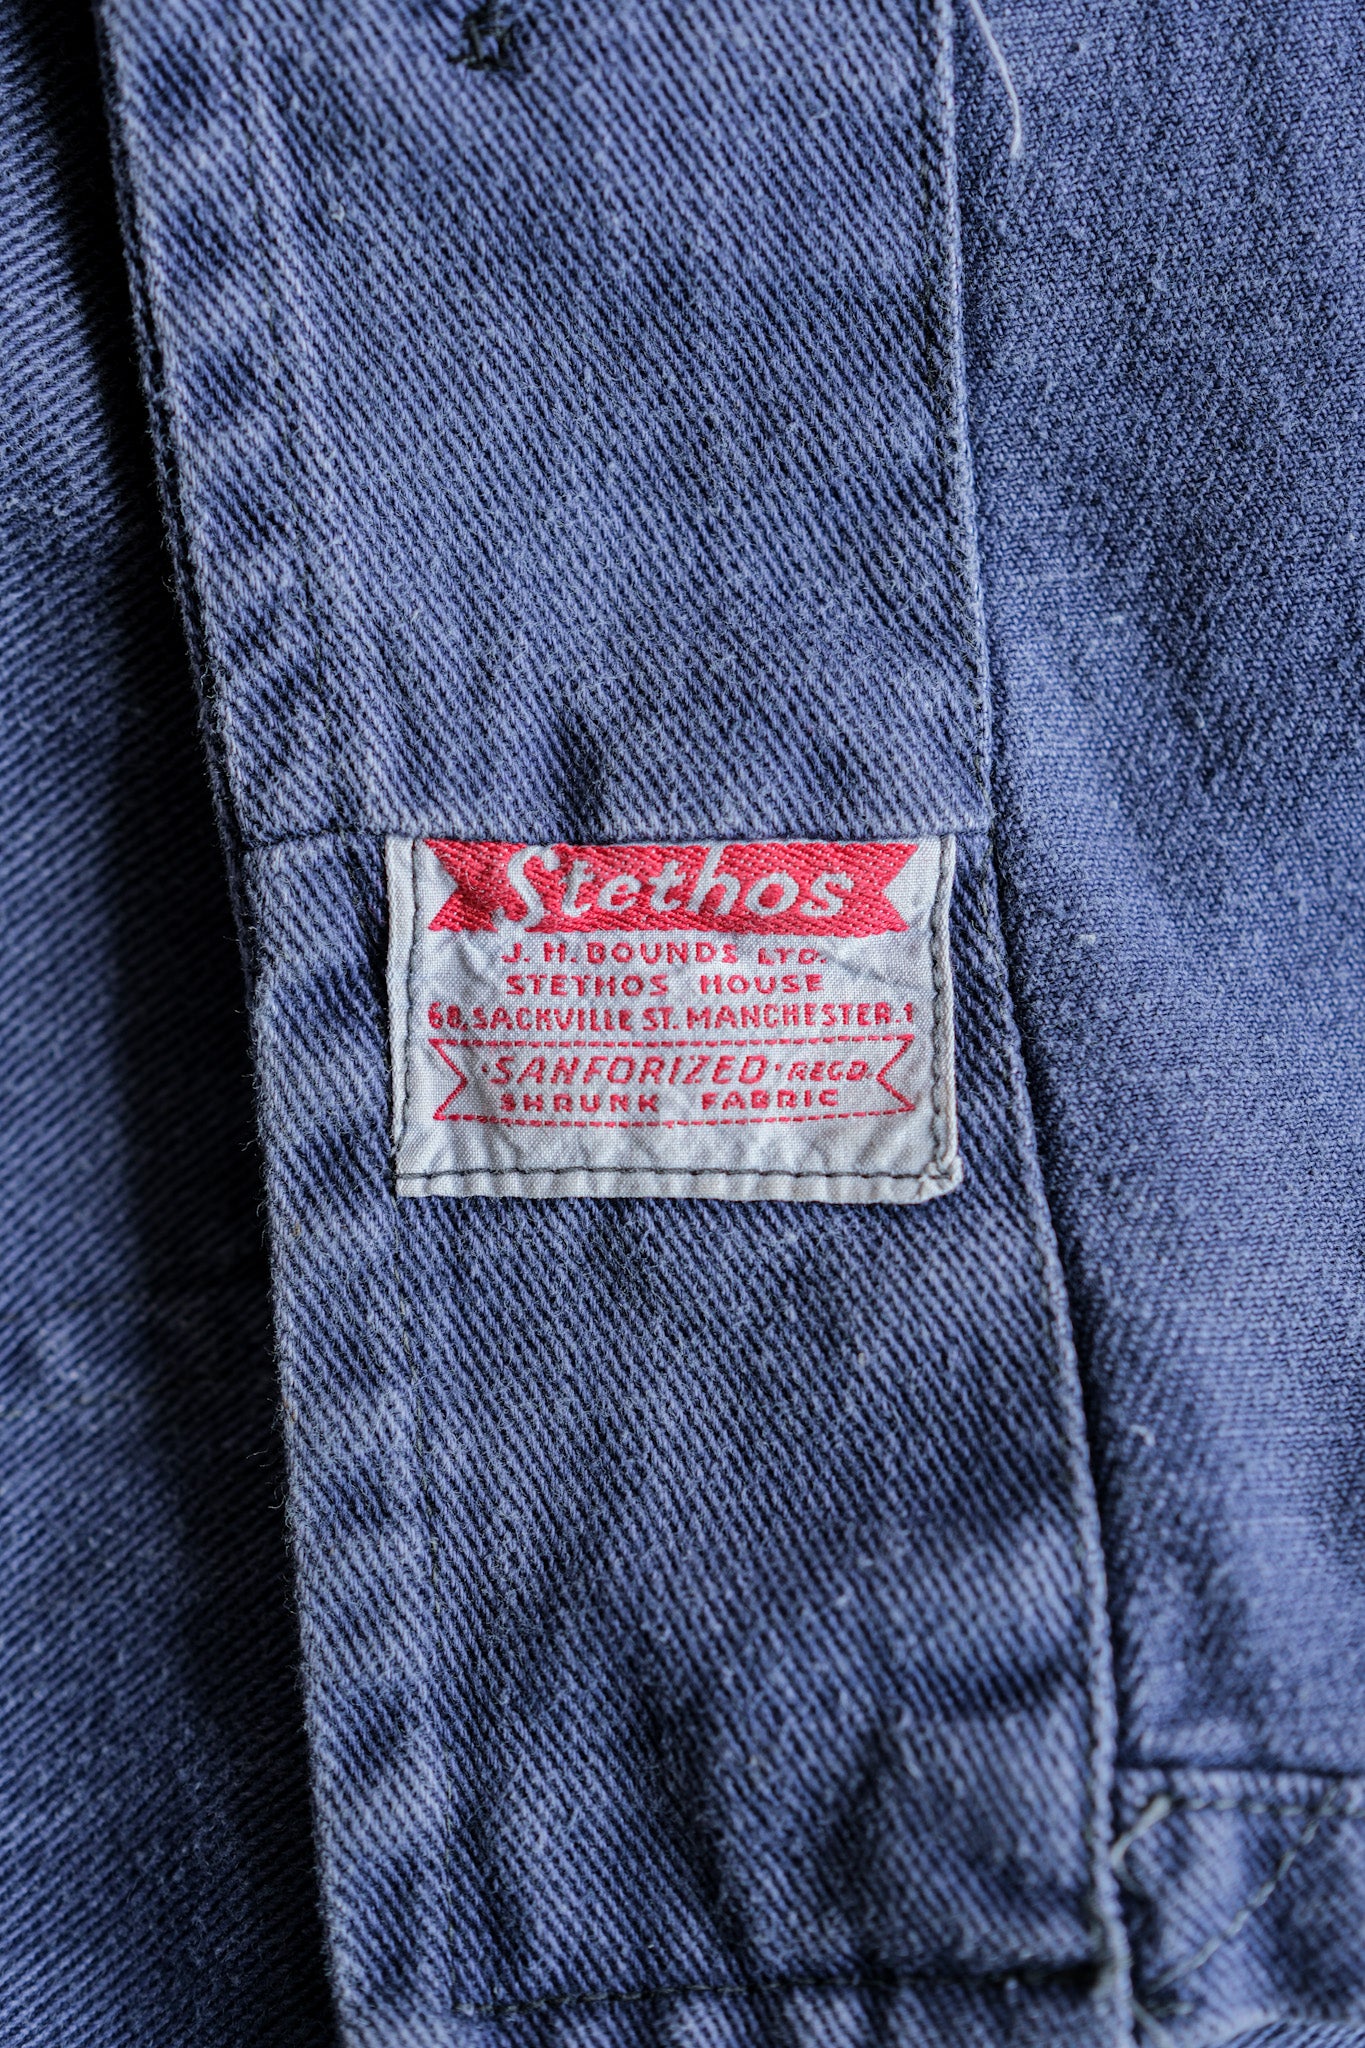 [~ 50's] British Vintage Blue Drill Stand Collar Collar Jacket Size.42